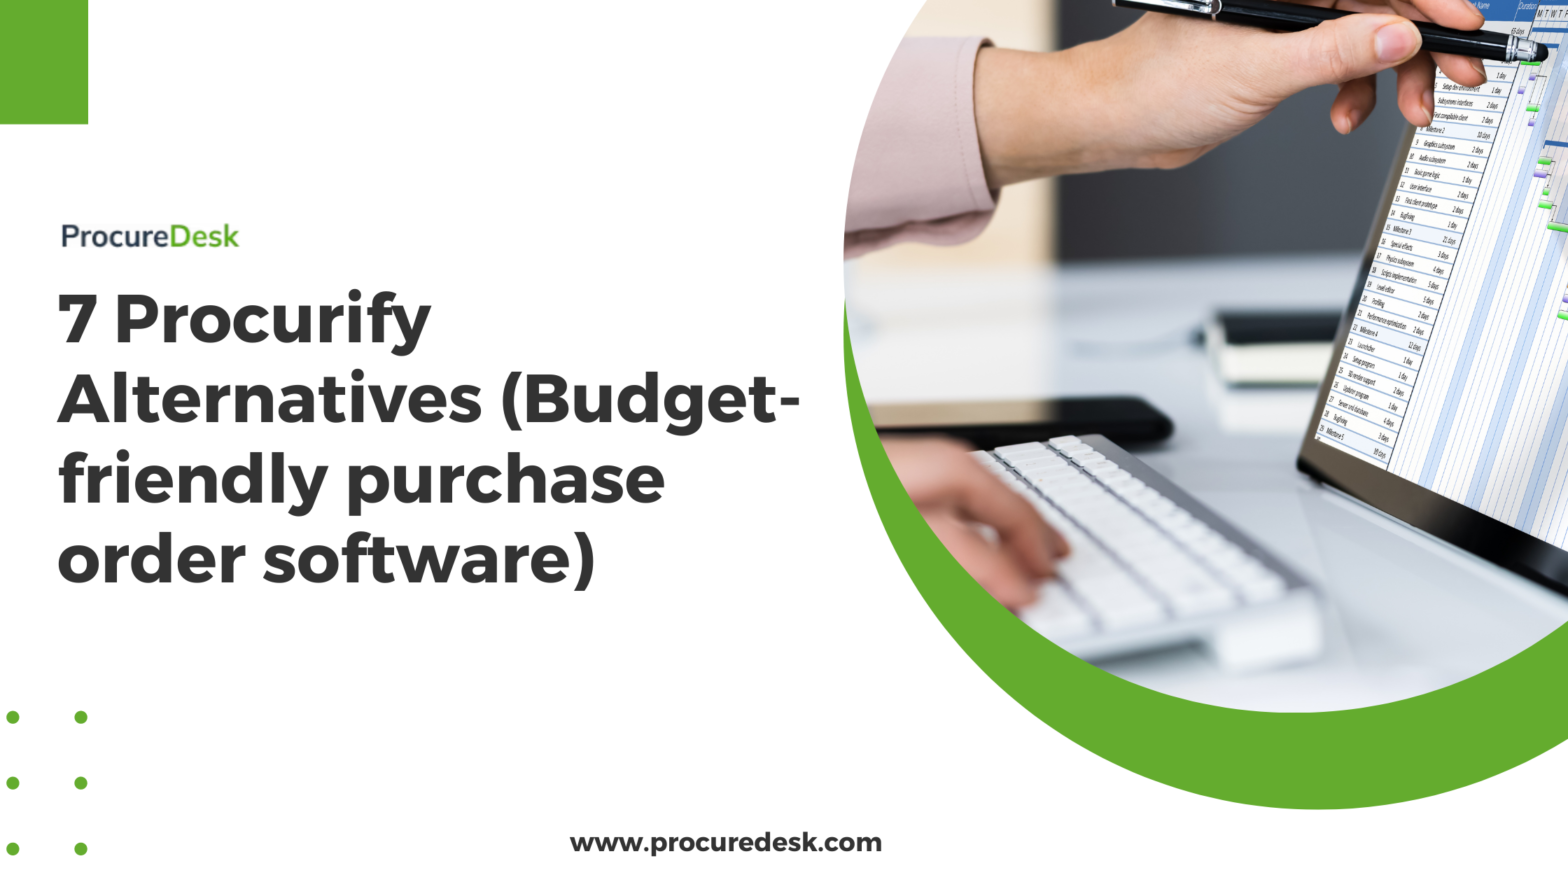 7 Procurify Alternatives (Budget-friendly purchase order software)